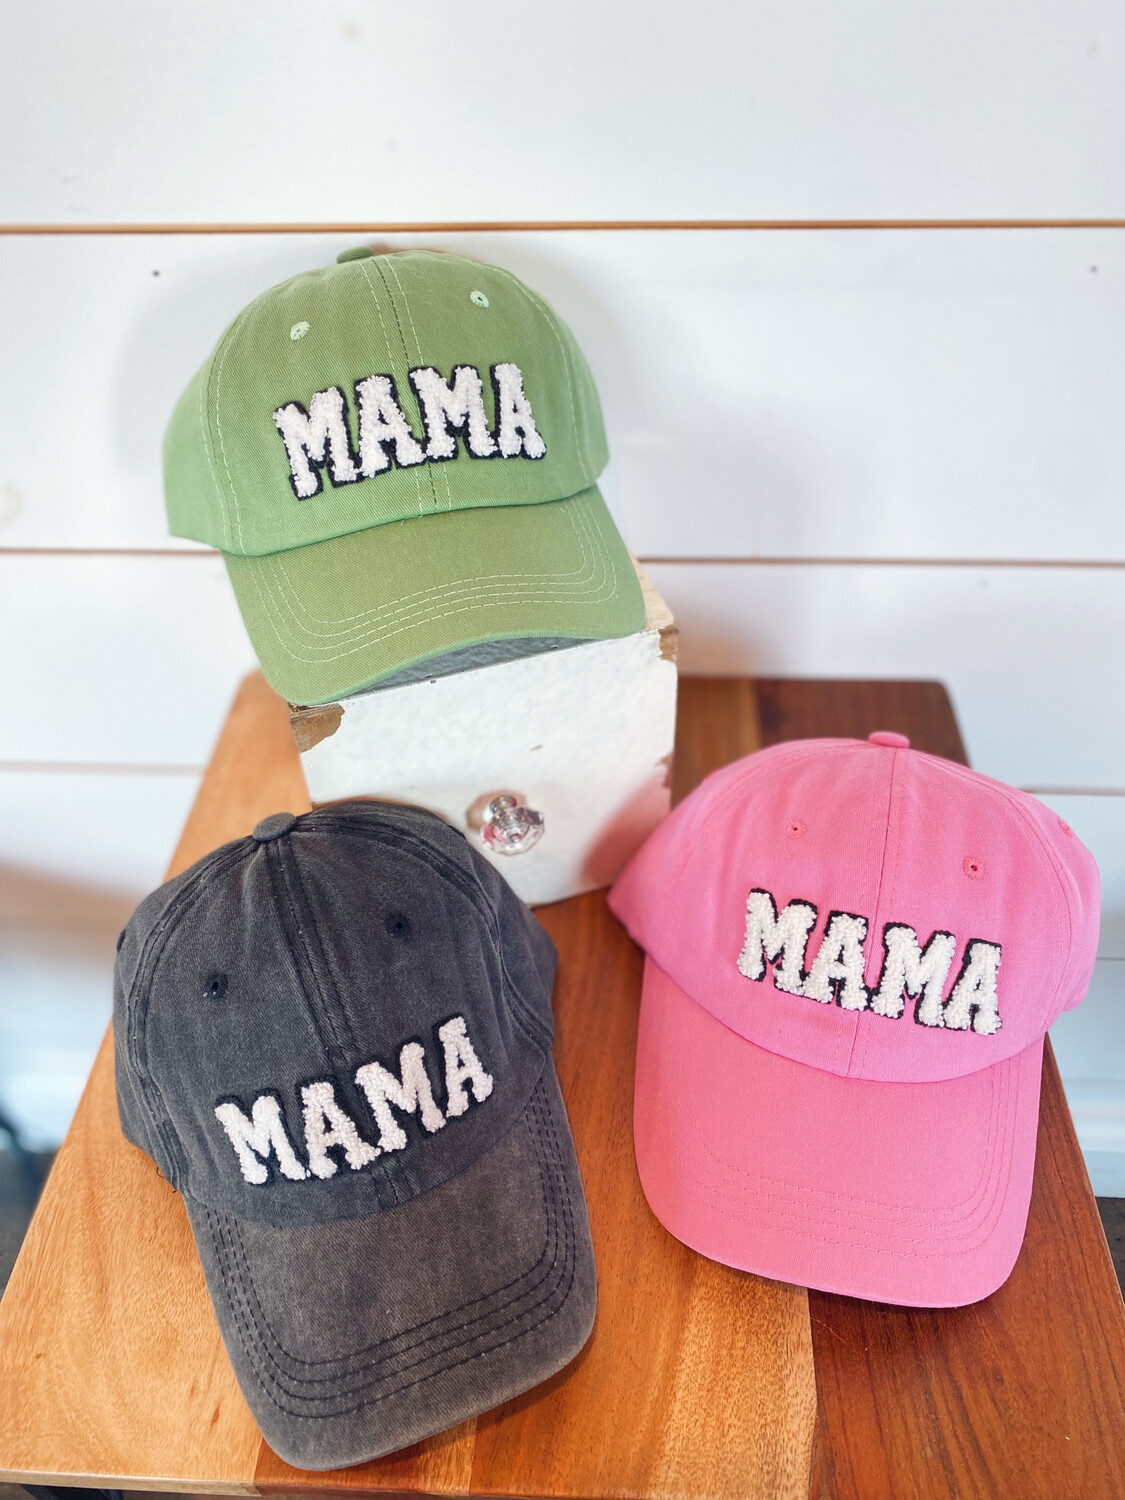 Mama Patch Hat